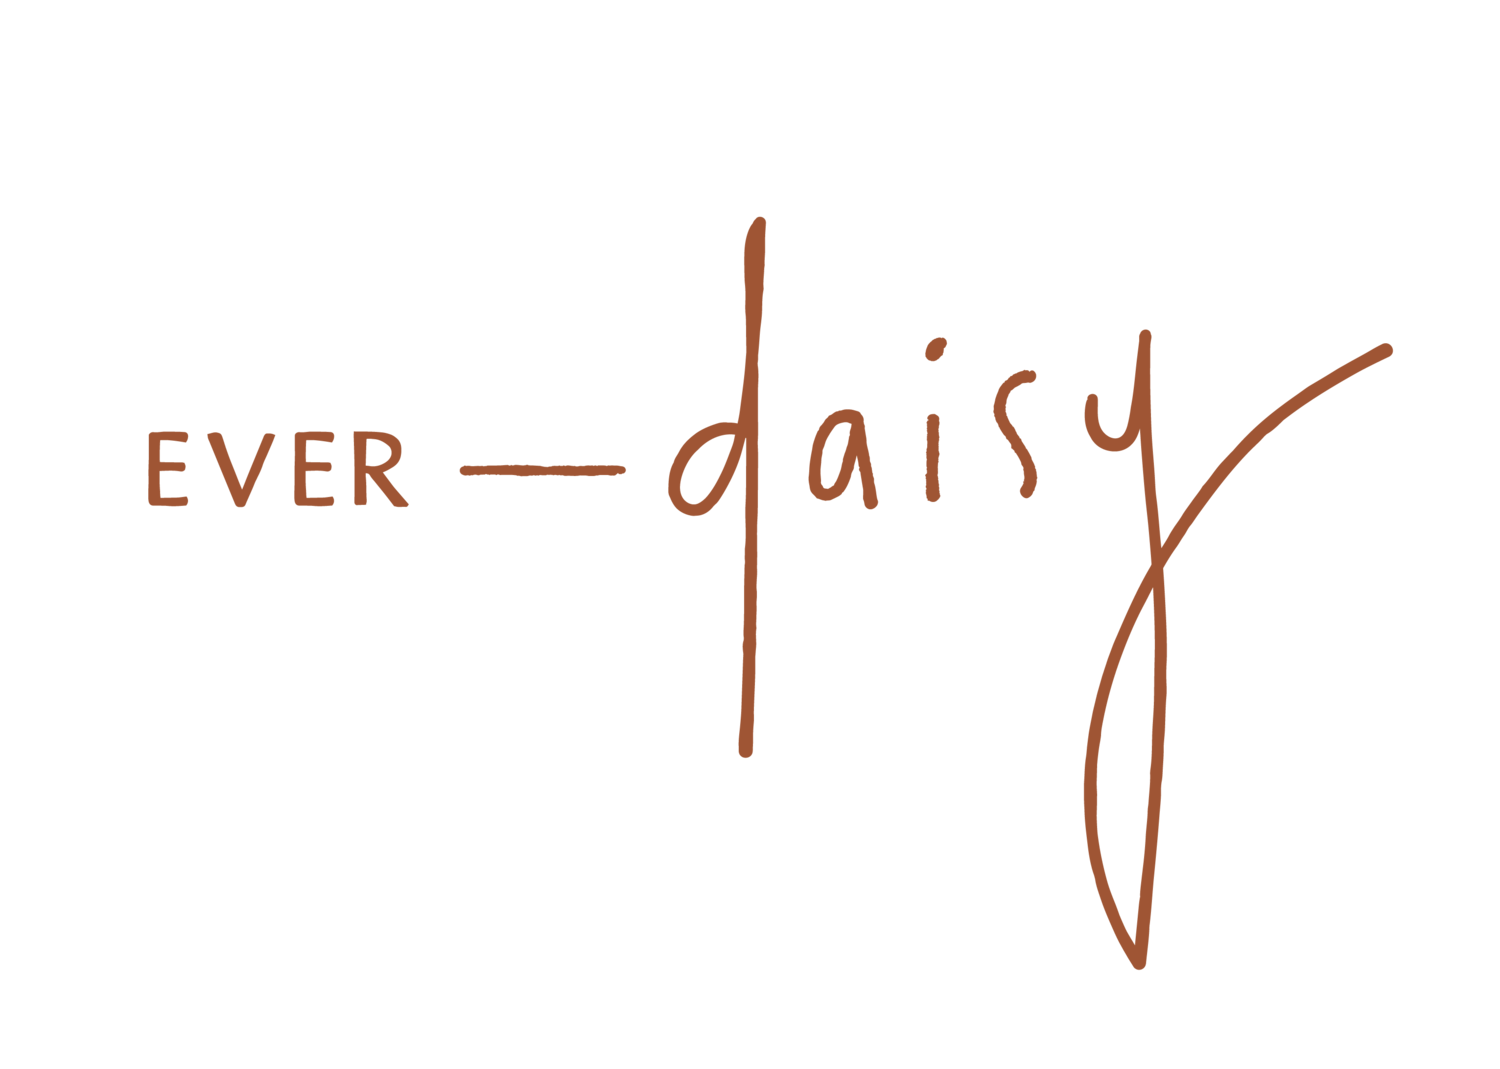 Ever Daisy